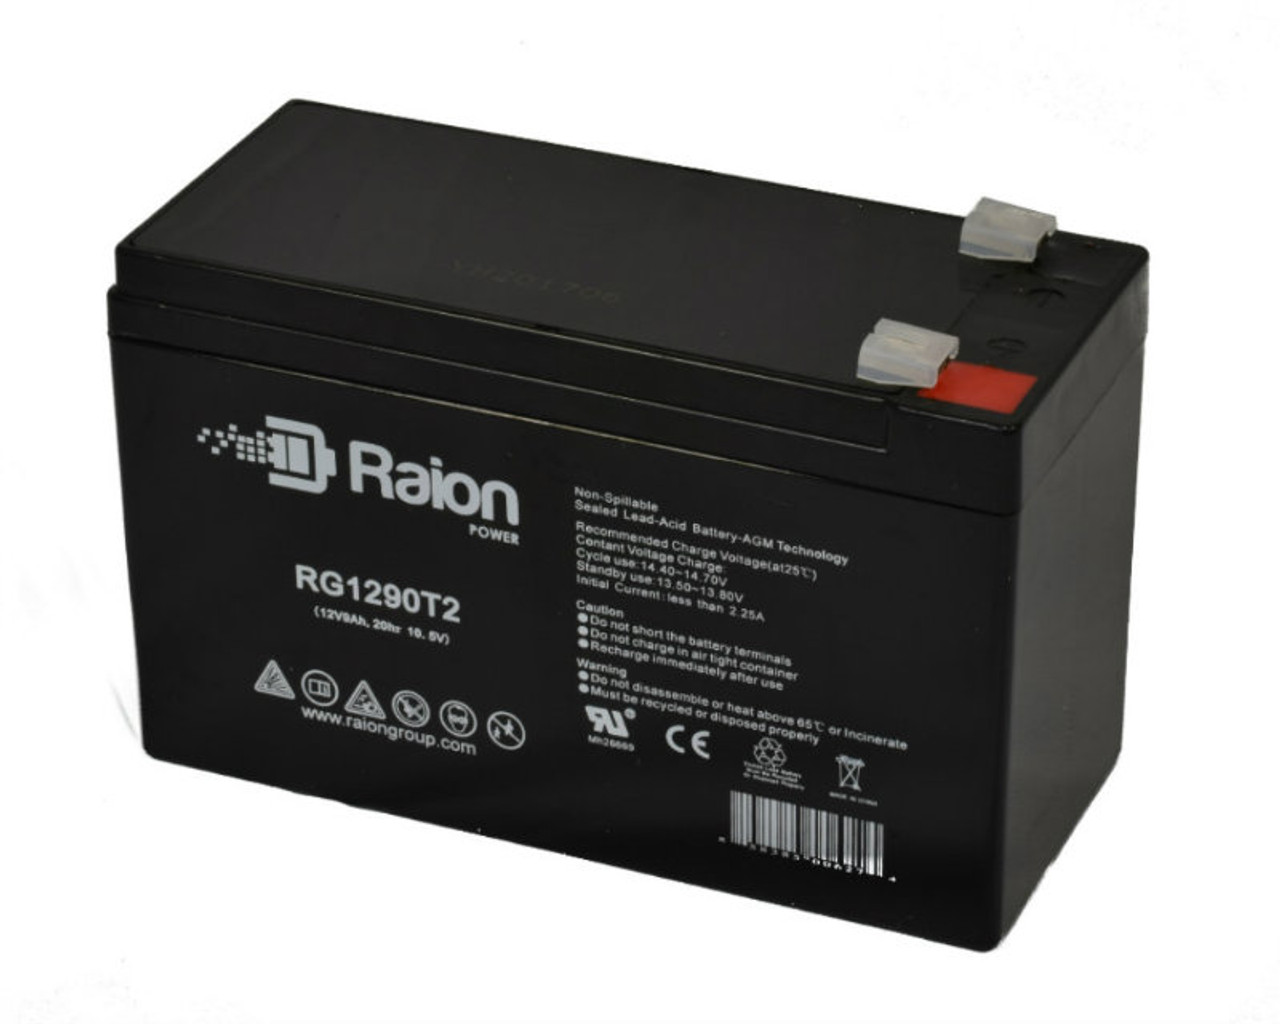 Raion Power RG1290T2 12V 9Ah AGM Battery for MHB MS9-12